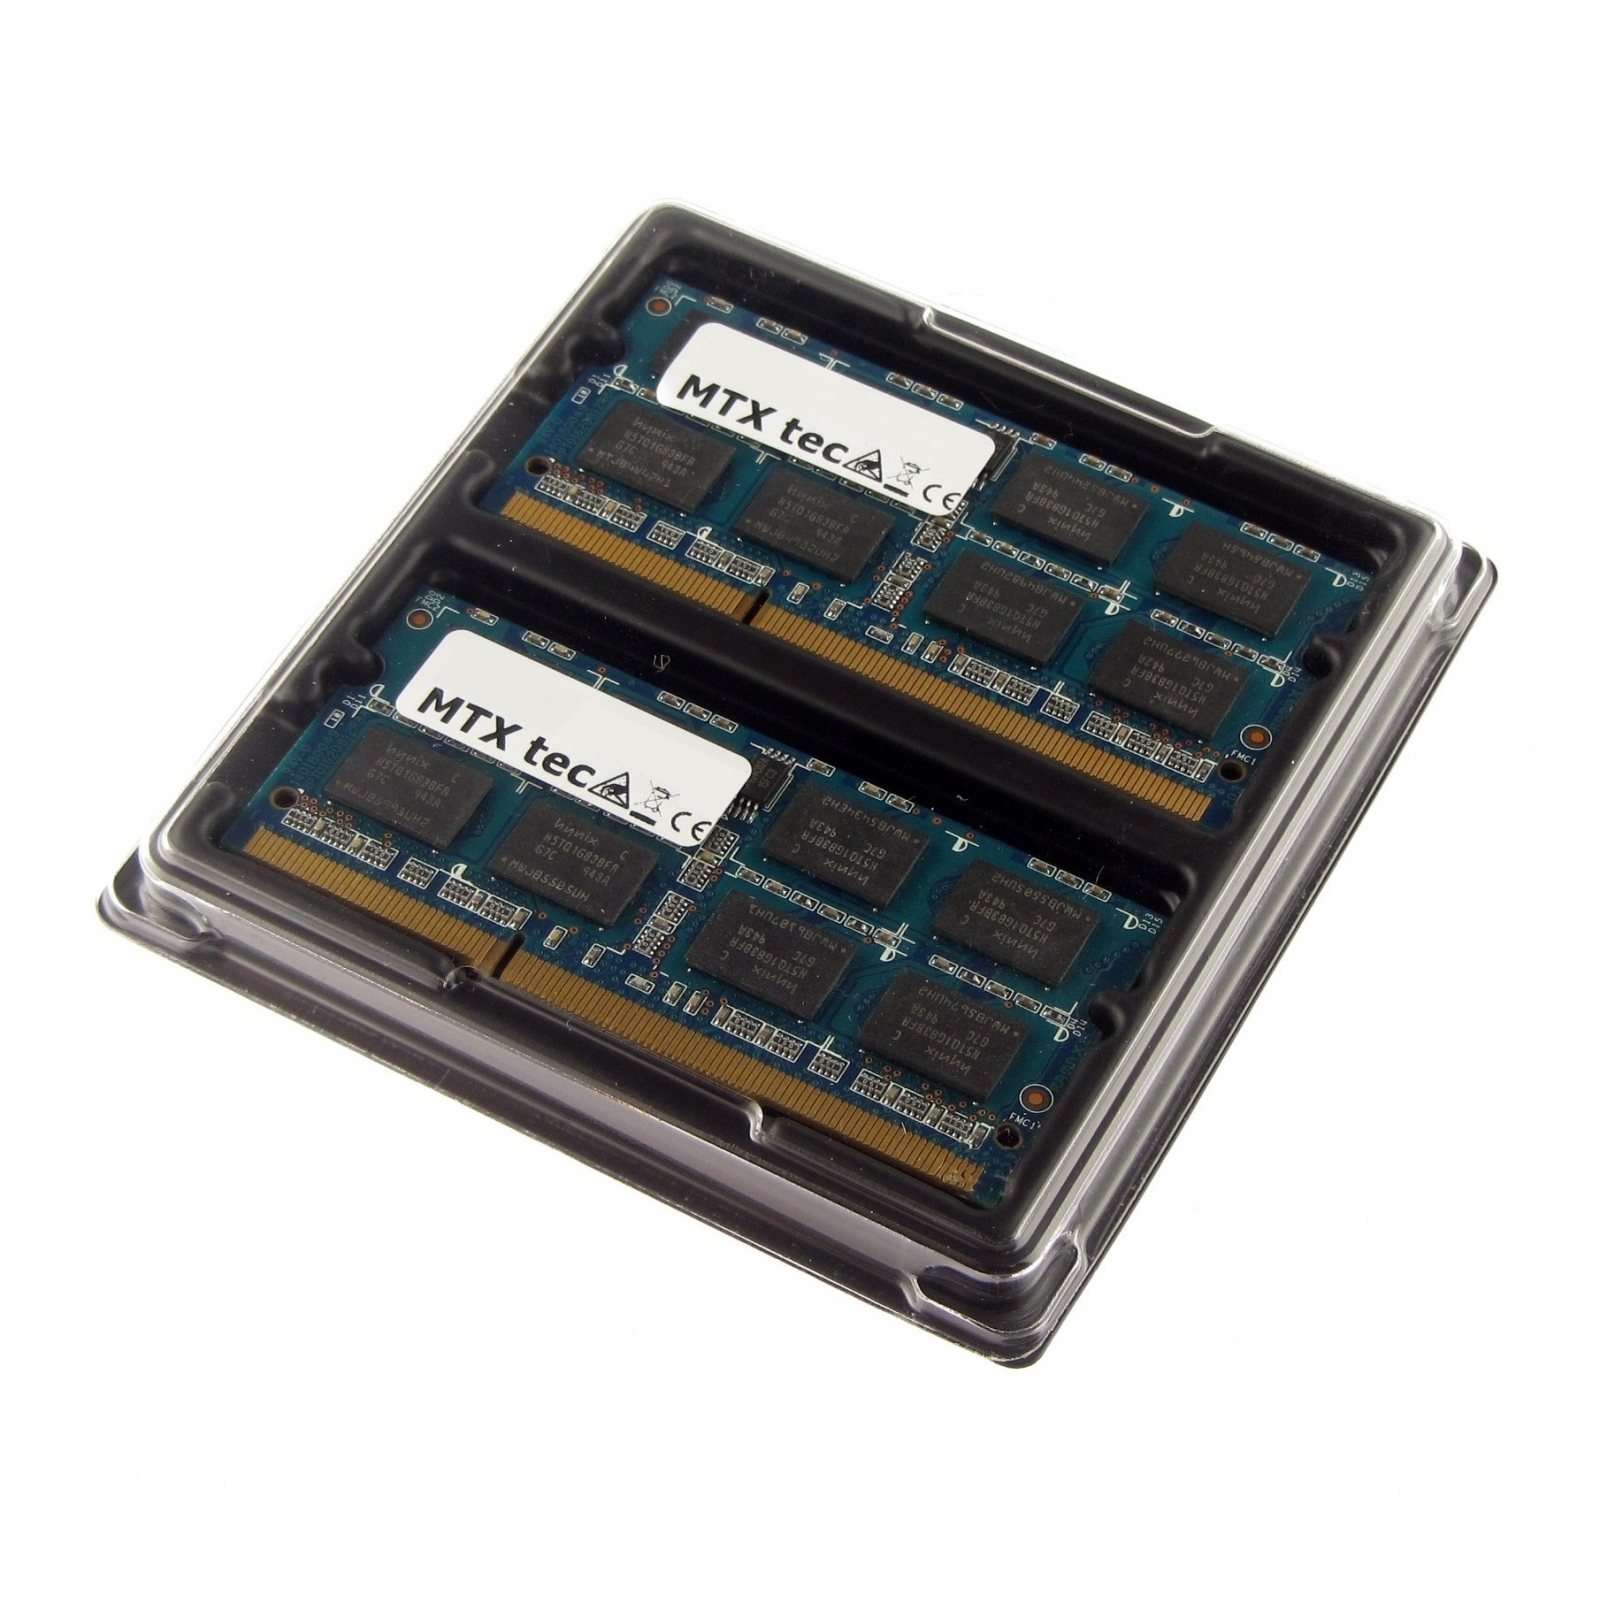 MTXTEC 4GB Kit DDR3 PC3-10600, Pin RAM Notebook-Speicher GB Laptop-Speicher 2x DDR3 2 SODIMM DDR3 204 2GB 1333MHz